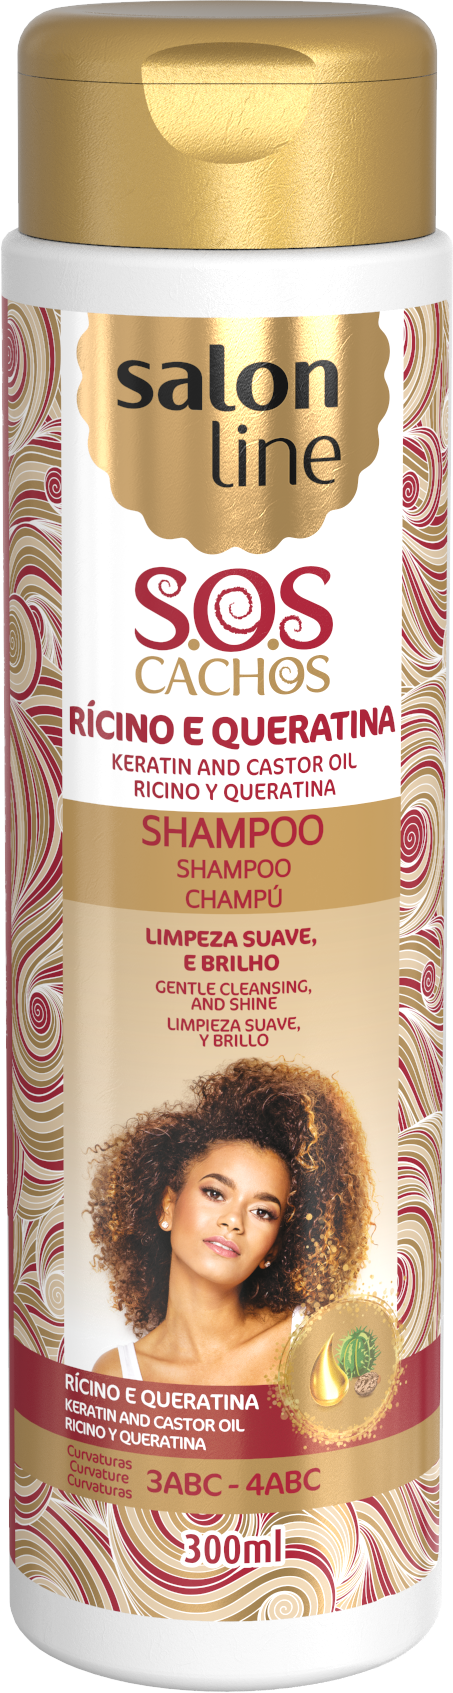 Salon Line S.O.S Cachos Keratin and Castor Oil Shampoo 300ml Salon Line